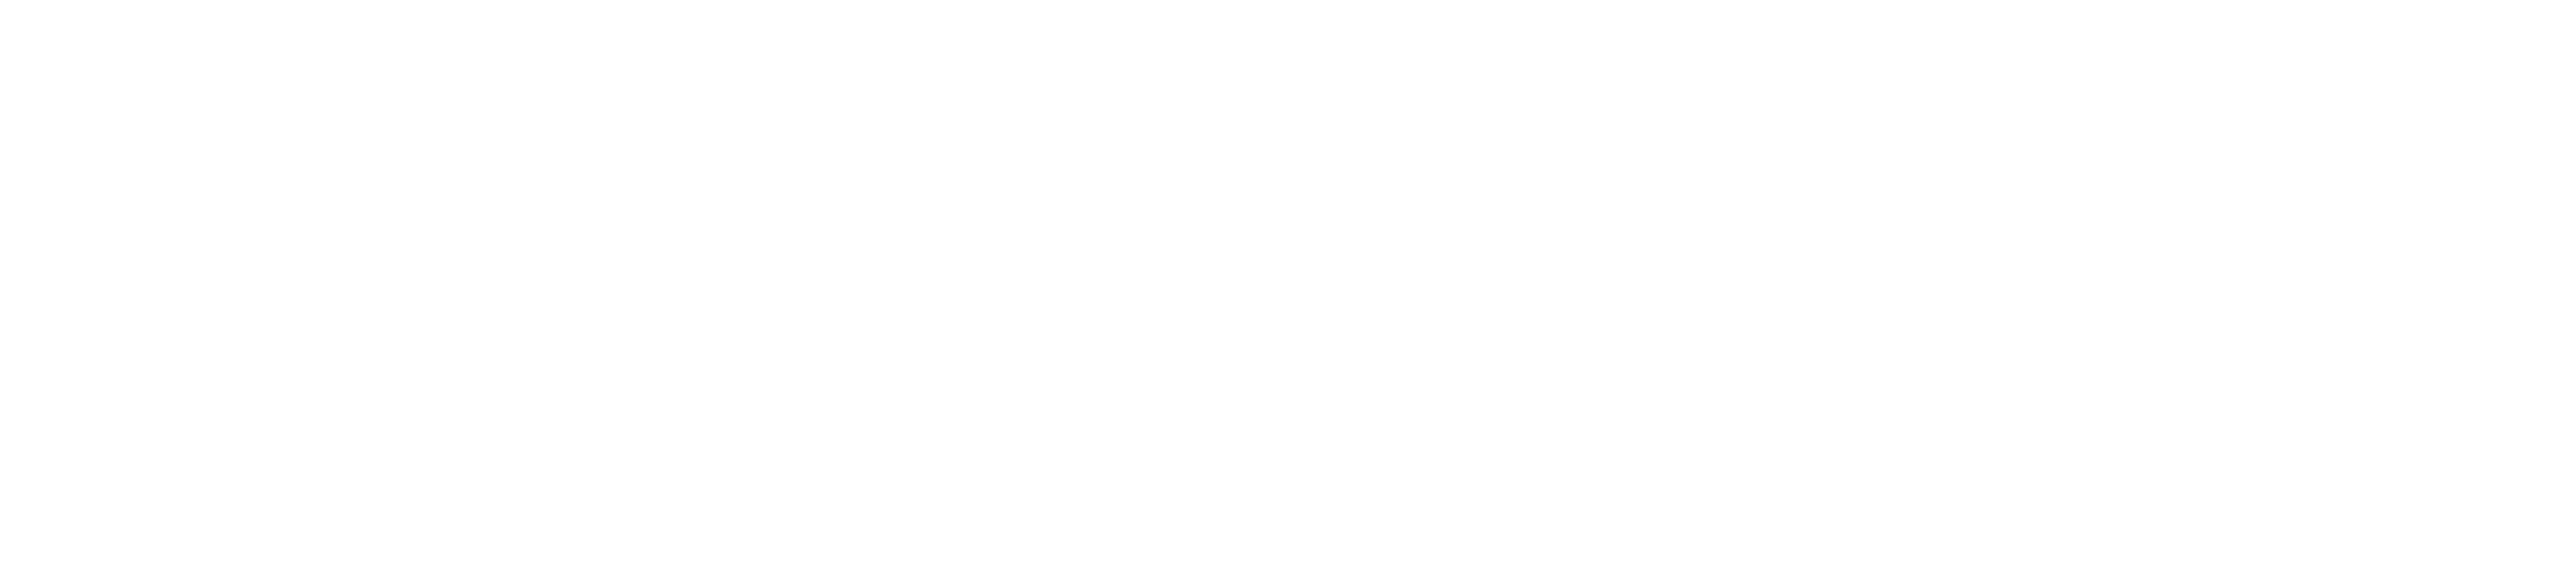 Cobham Academy Ltd.